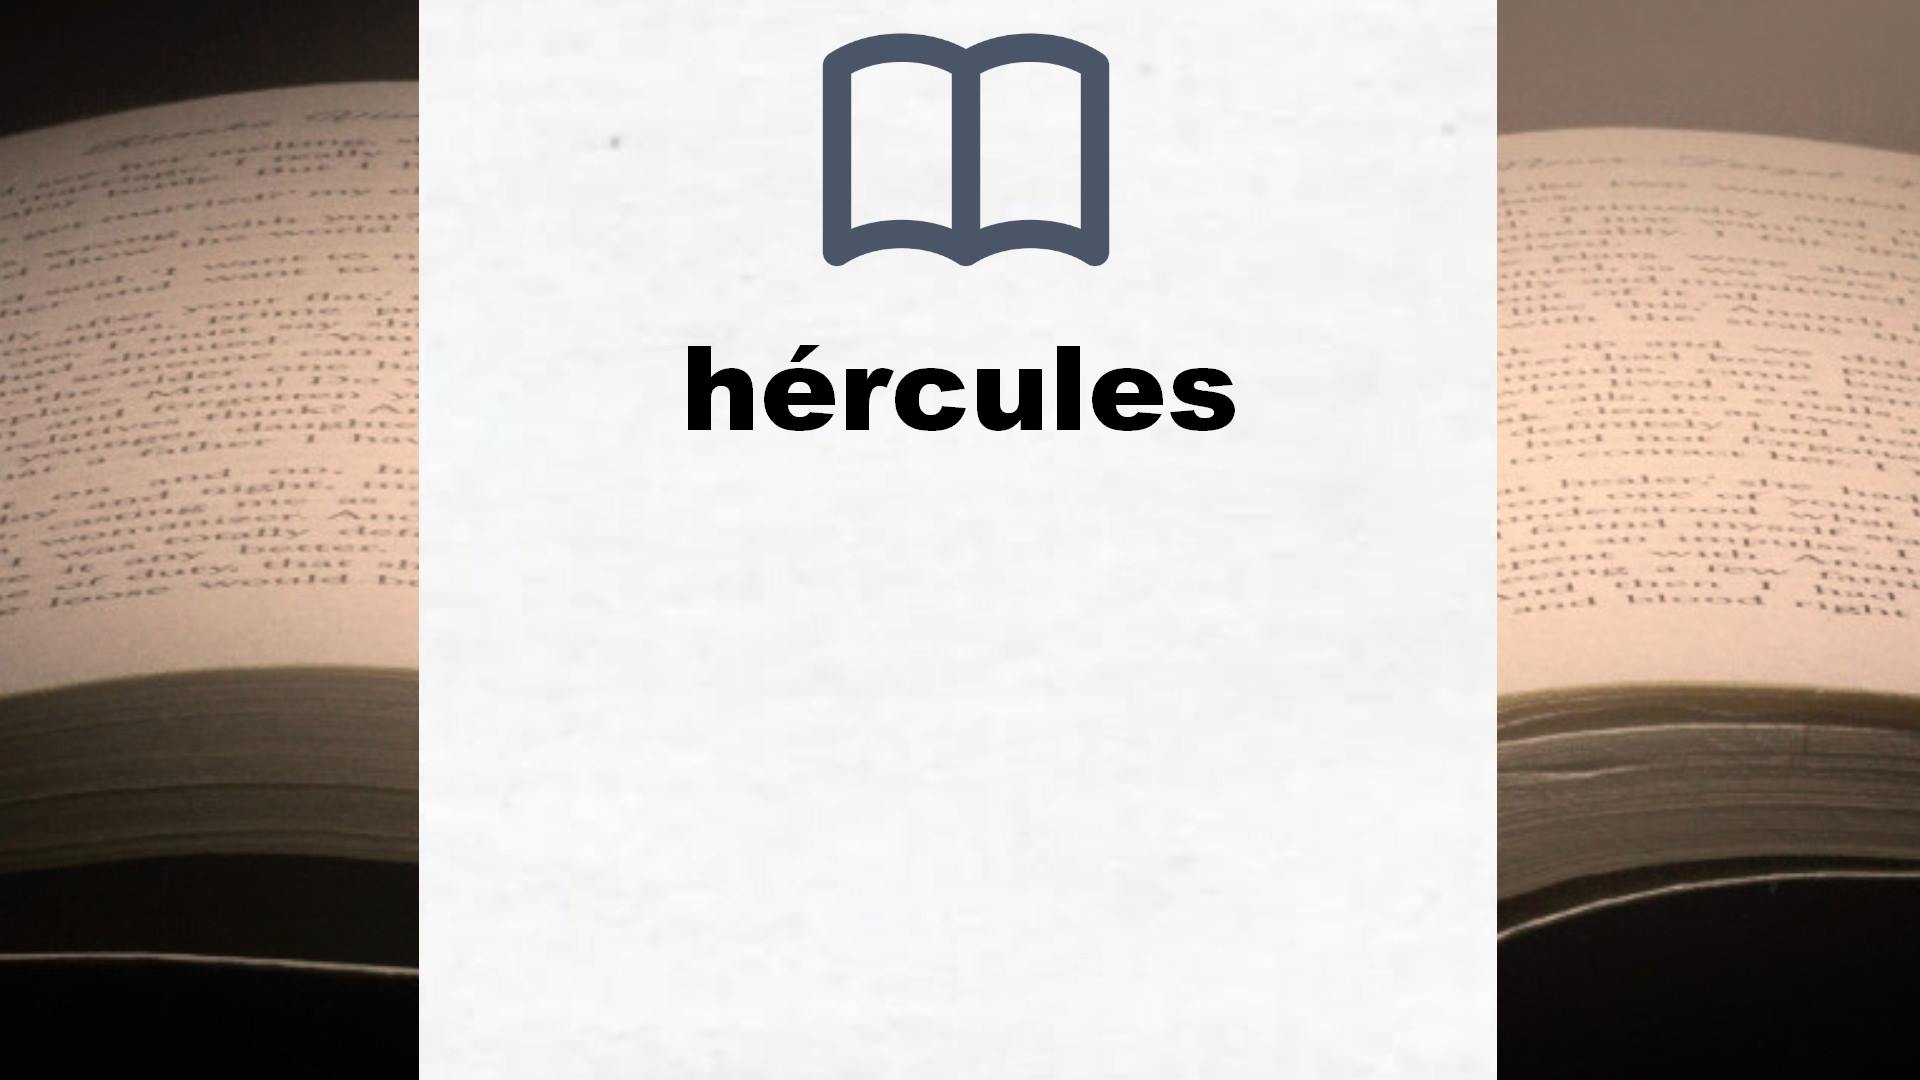 Libros sobre hércules